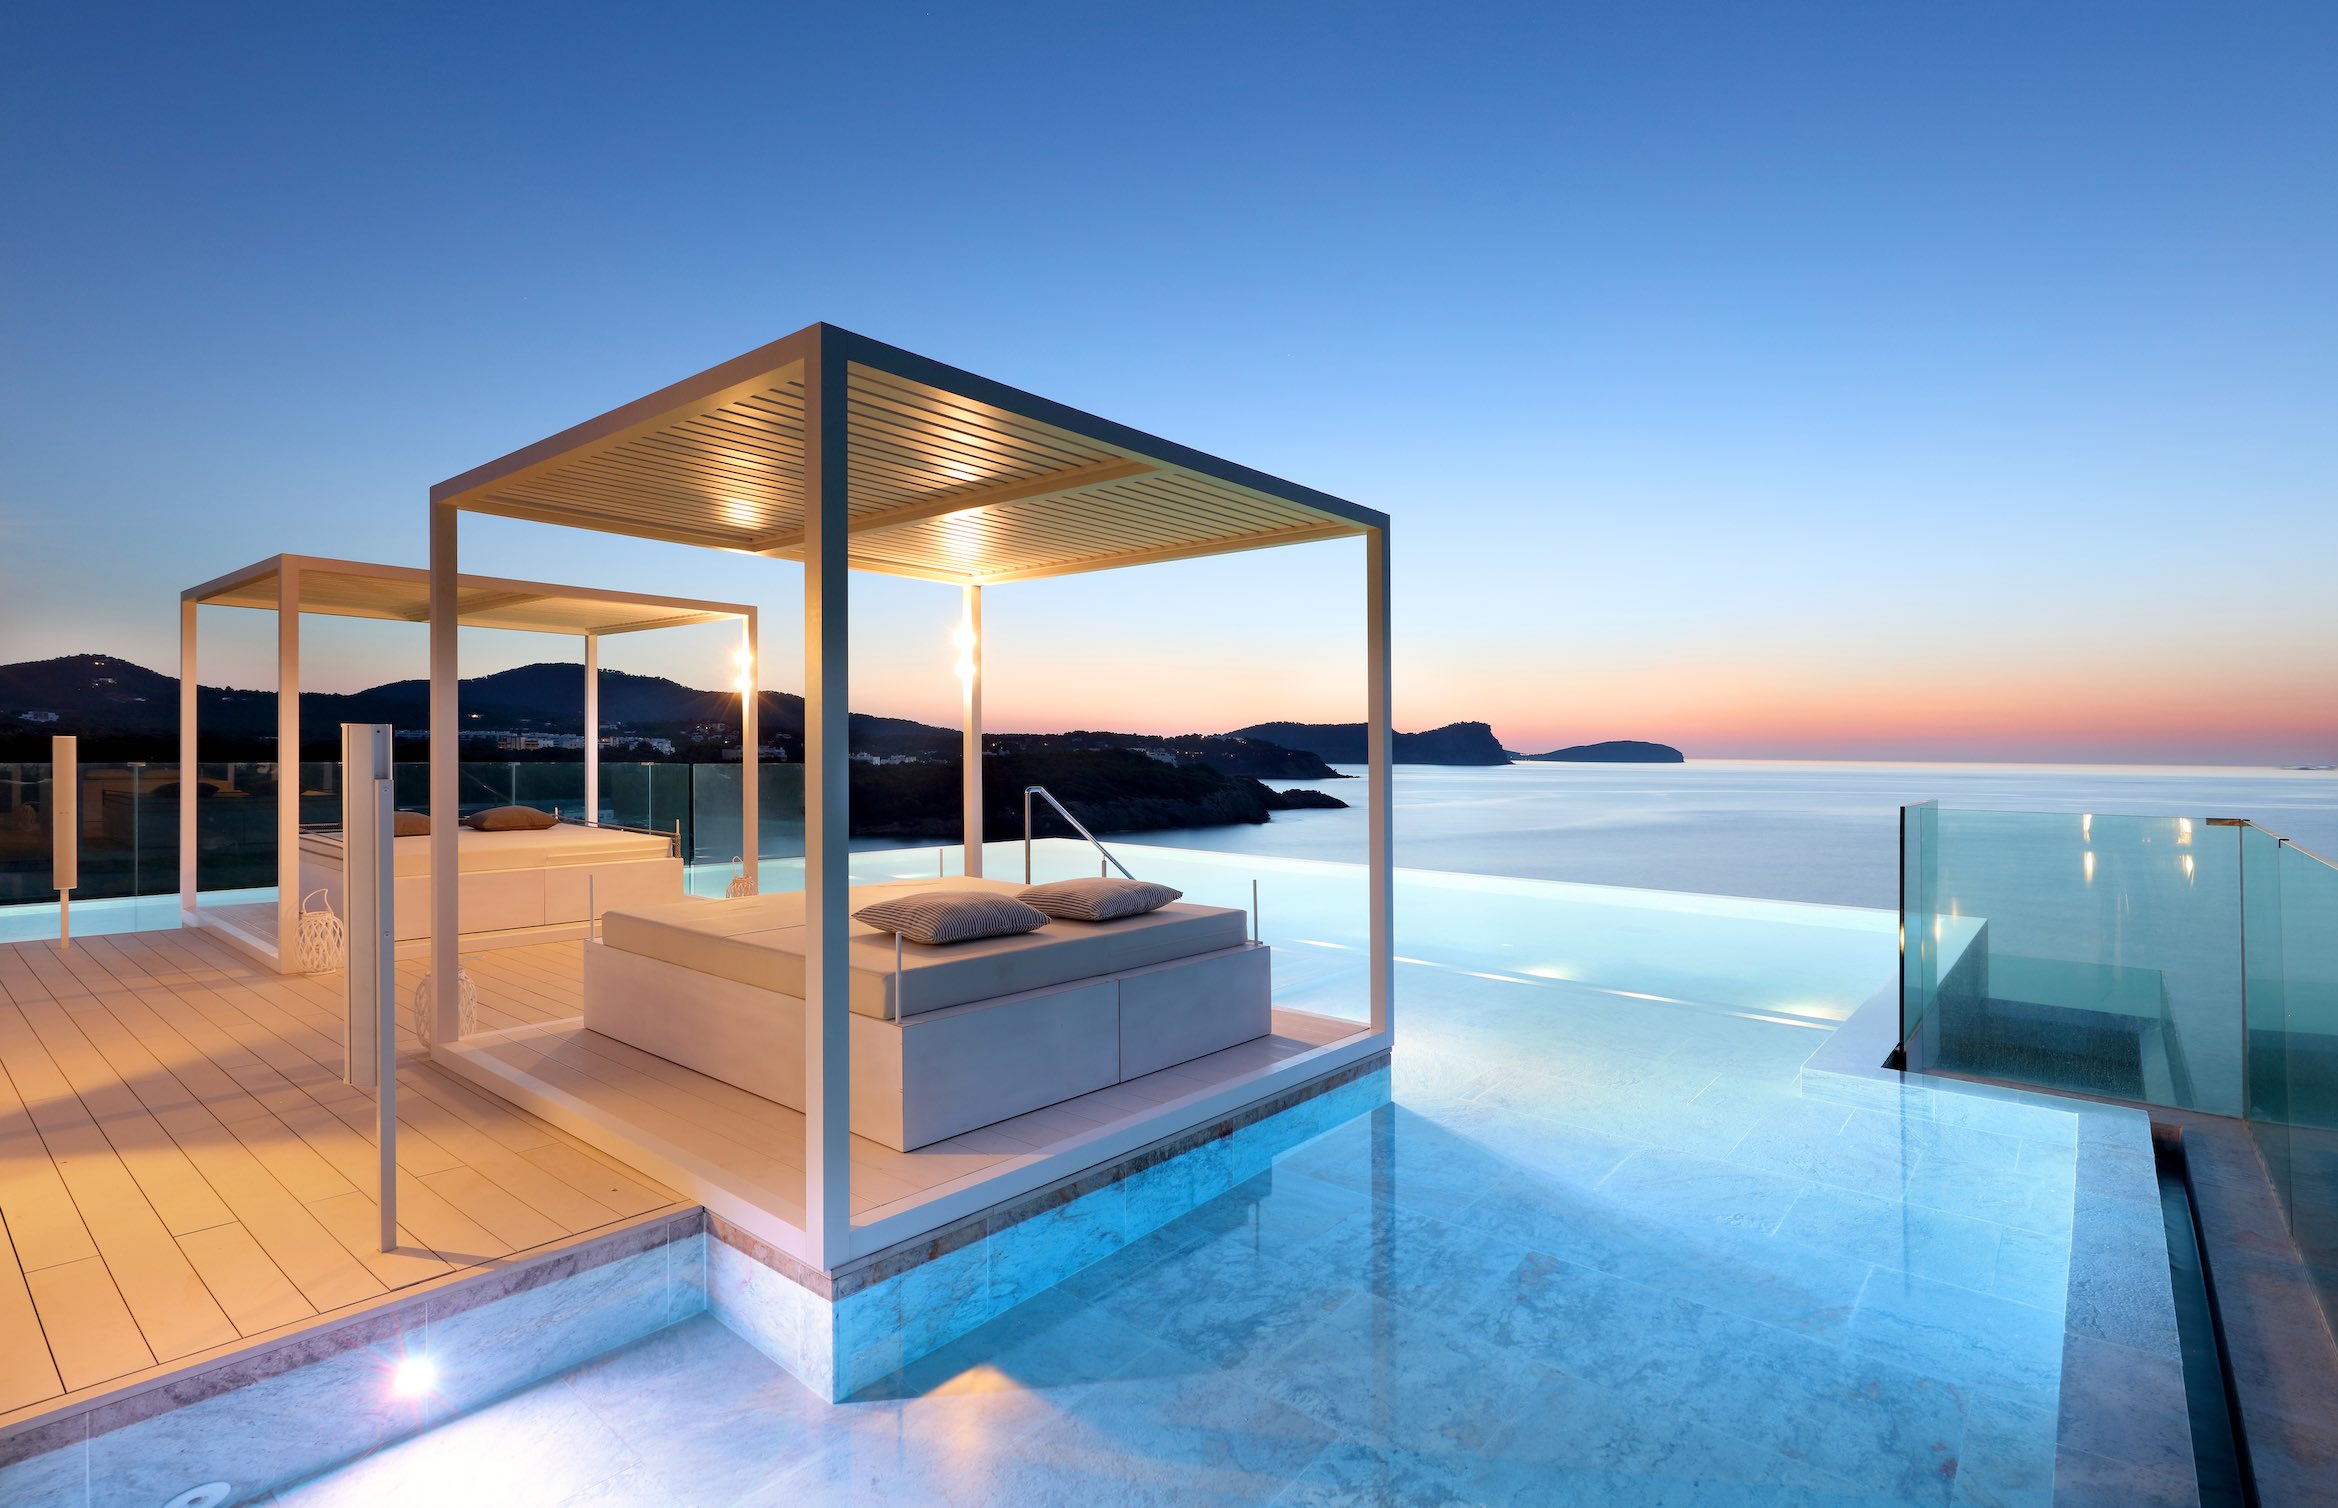 Bless Hotel Ibiza (image: Roberto Lara)